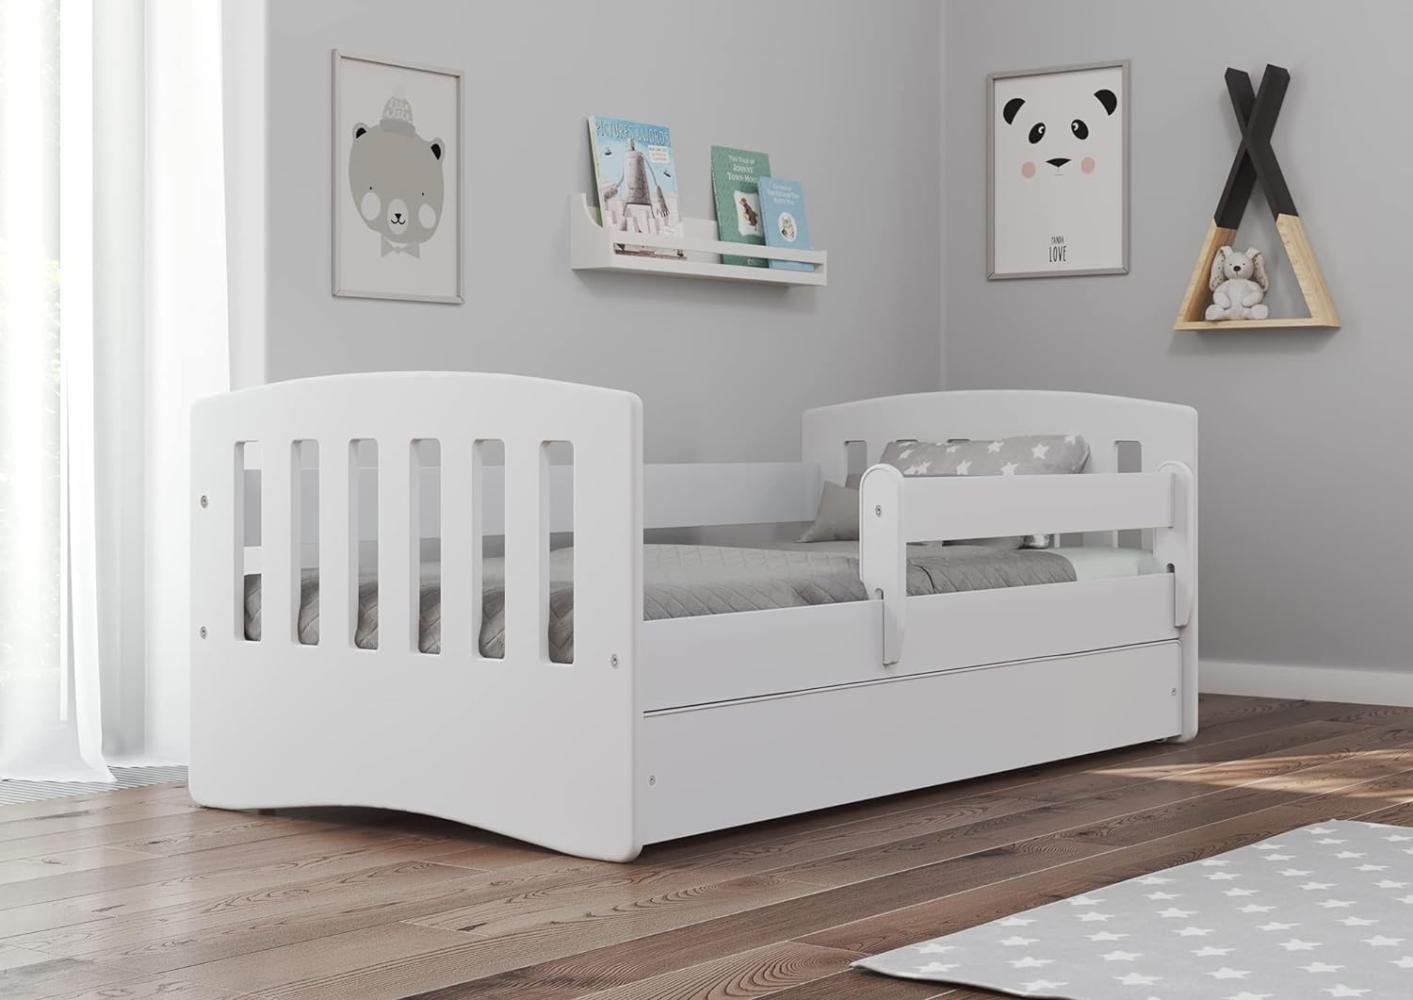 Bjird 'Classic' Kinderbett 80 x 180 cm, Weiß, inkl. Rausfallschutz, Lattenrost und Bettschublade Bild 1